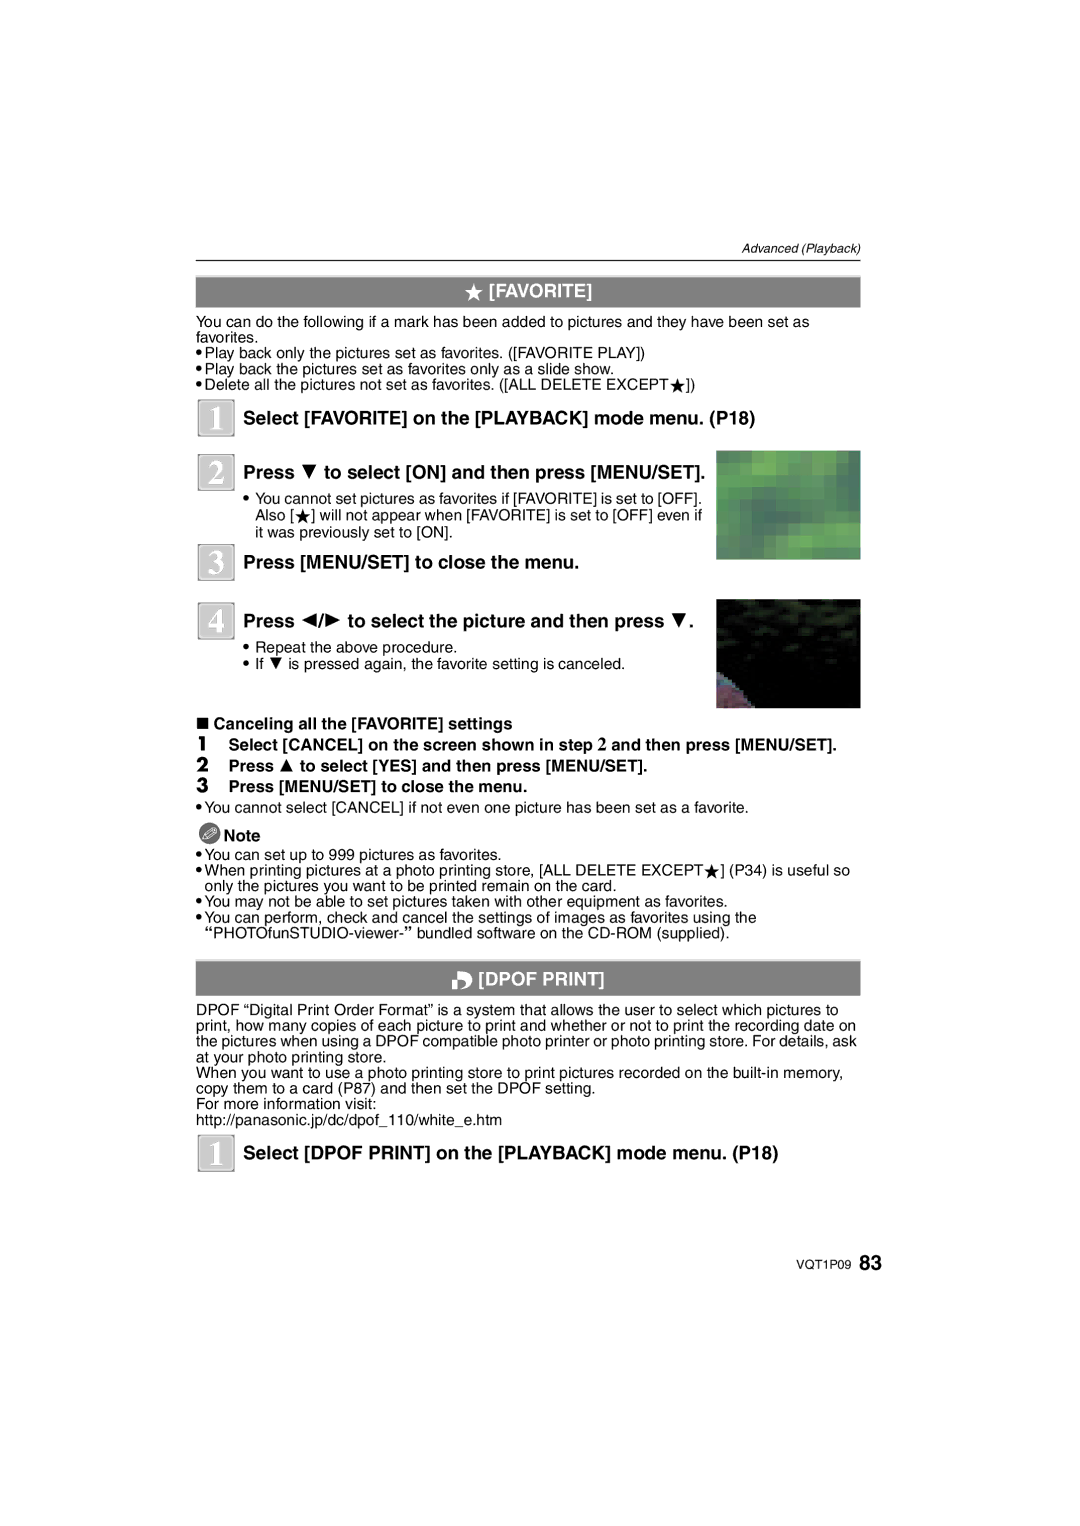 Panasonic DMC-FX35 operating instructions Favorite, Select Dpof Print on the Playback mode menu. P18 